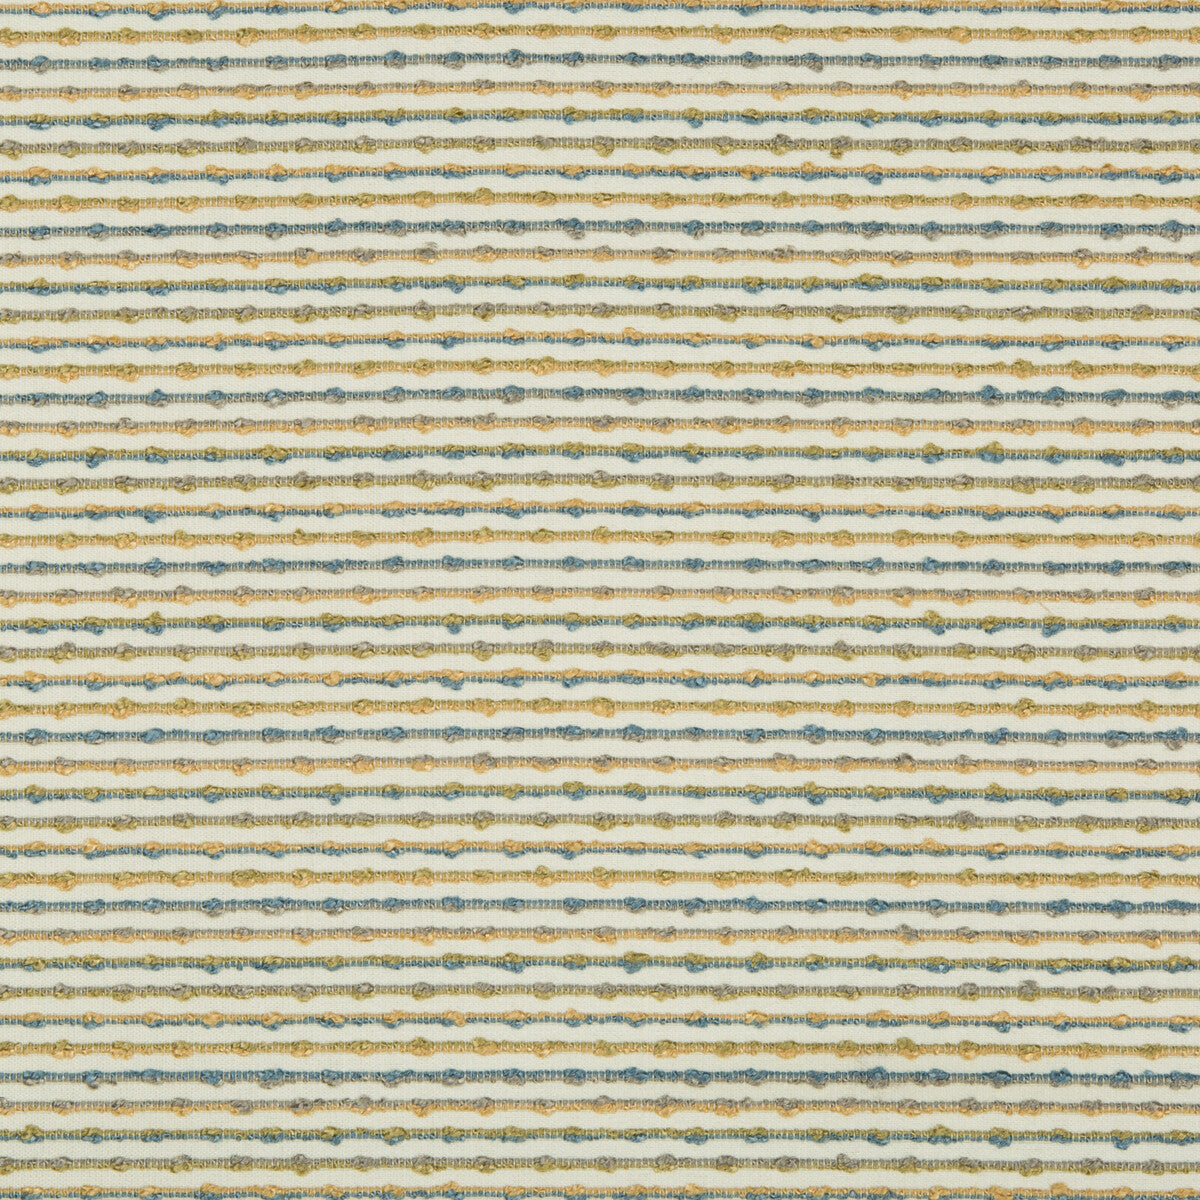 Kravet Design fabric in 34669-516 color - pattern 34669.516.0 - by Kravet Design in the Gis collection